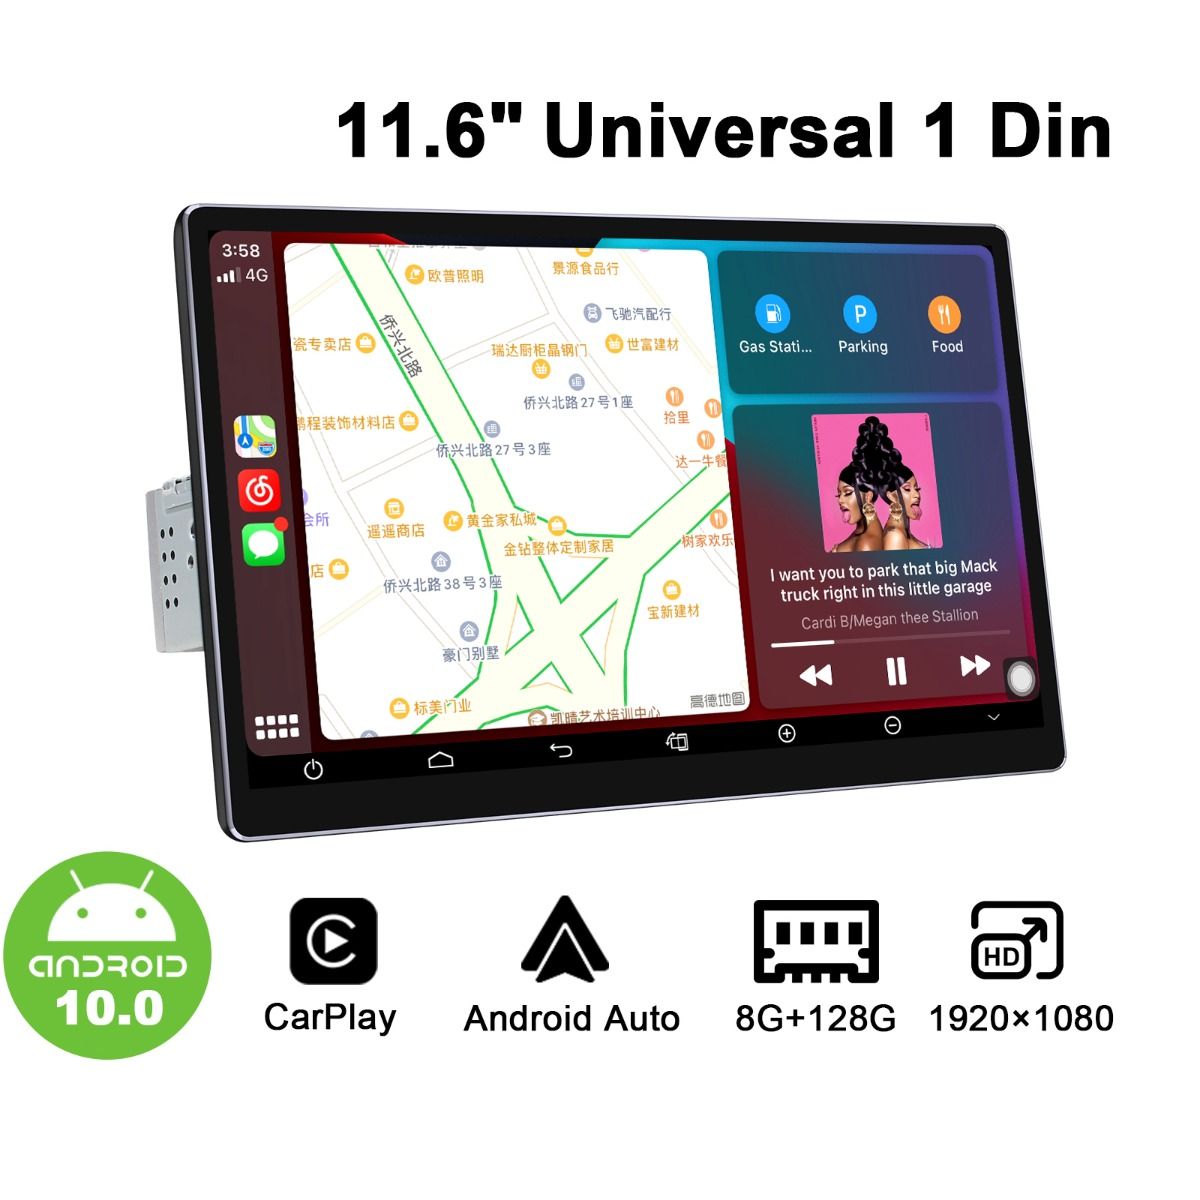 Pantalla Universal 1 DIN Radio Android Auto Carplay 5 Pulgadas